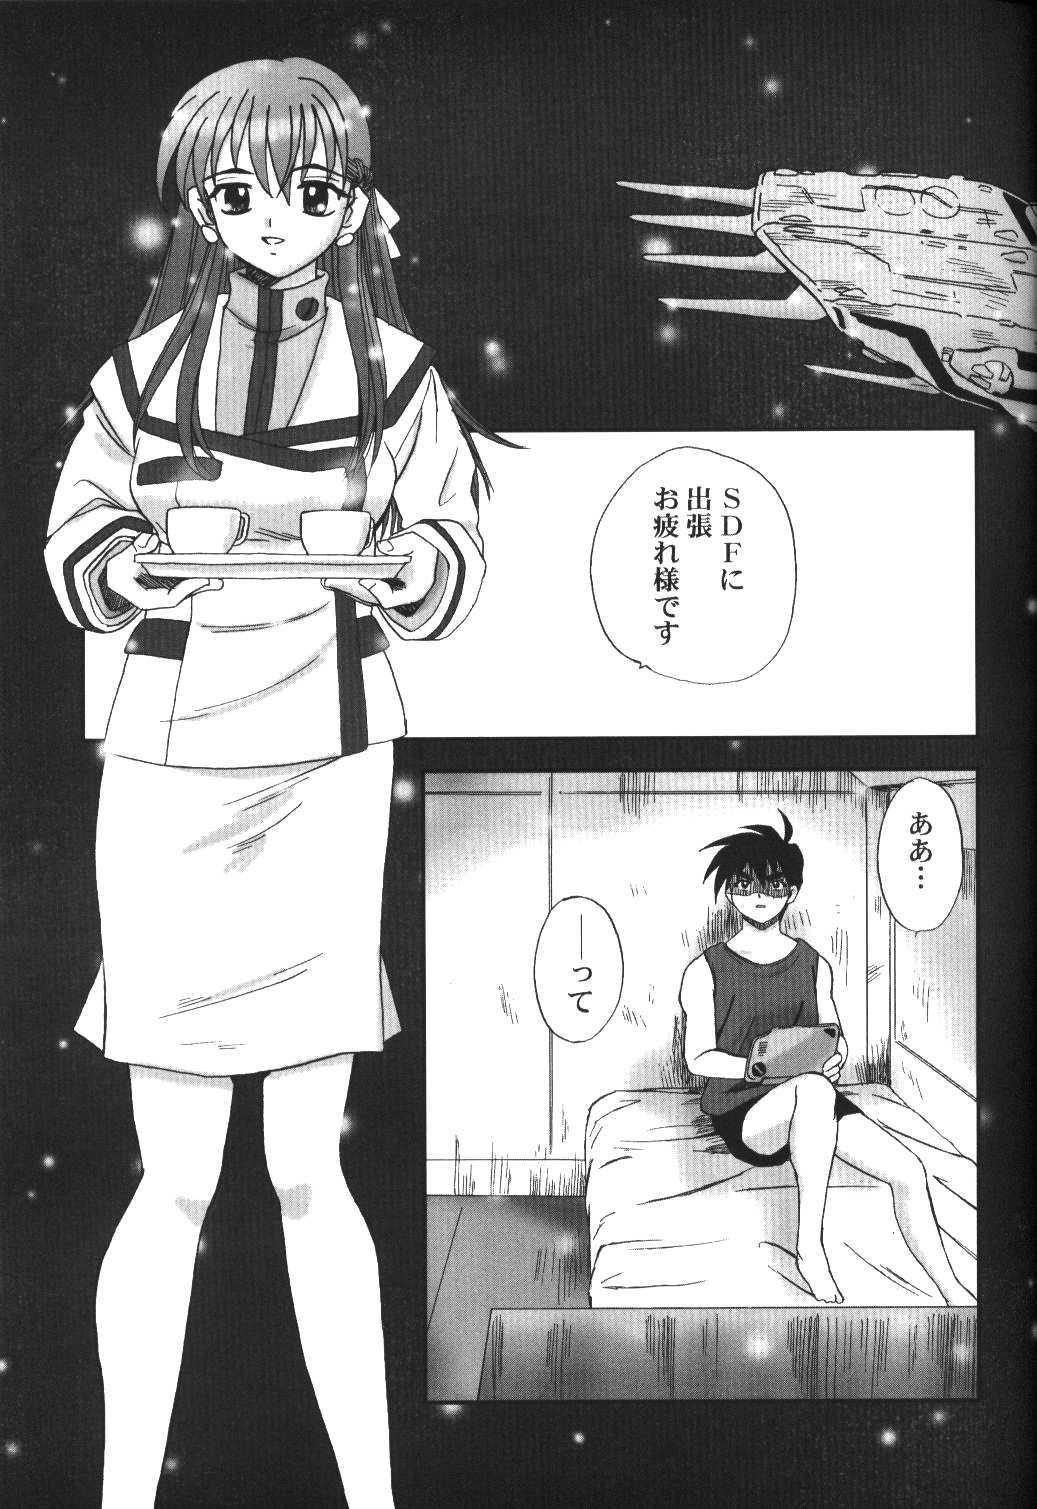 [Maguro Oukoku] Maguro Kingdom 2002 (Gundam Wing) 